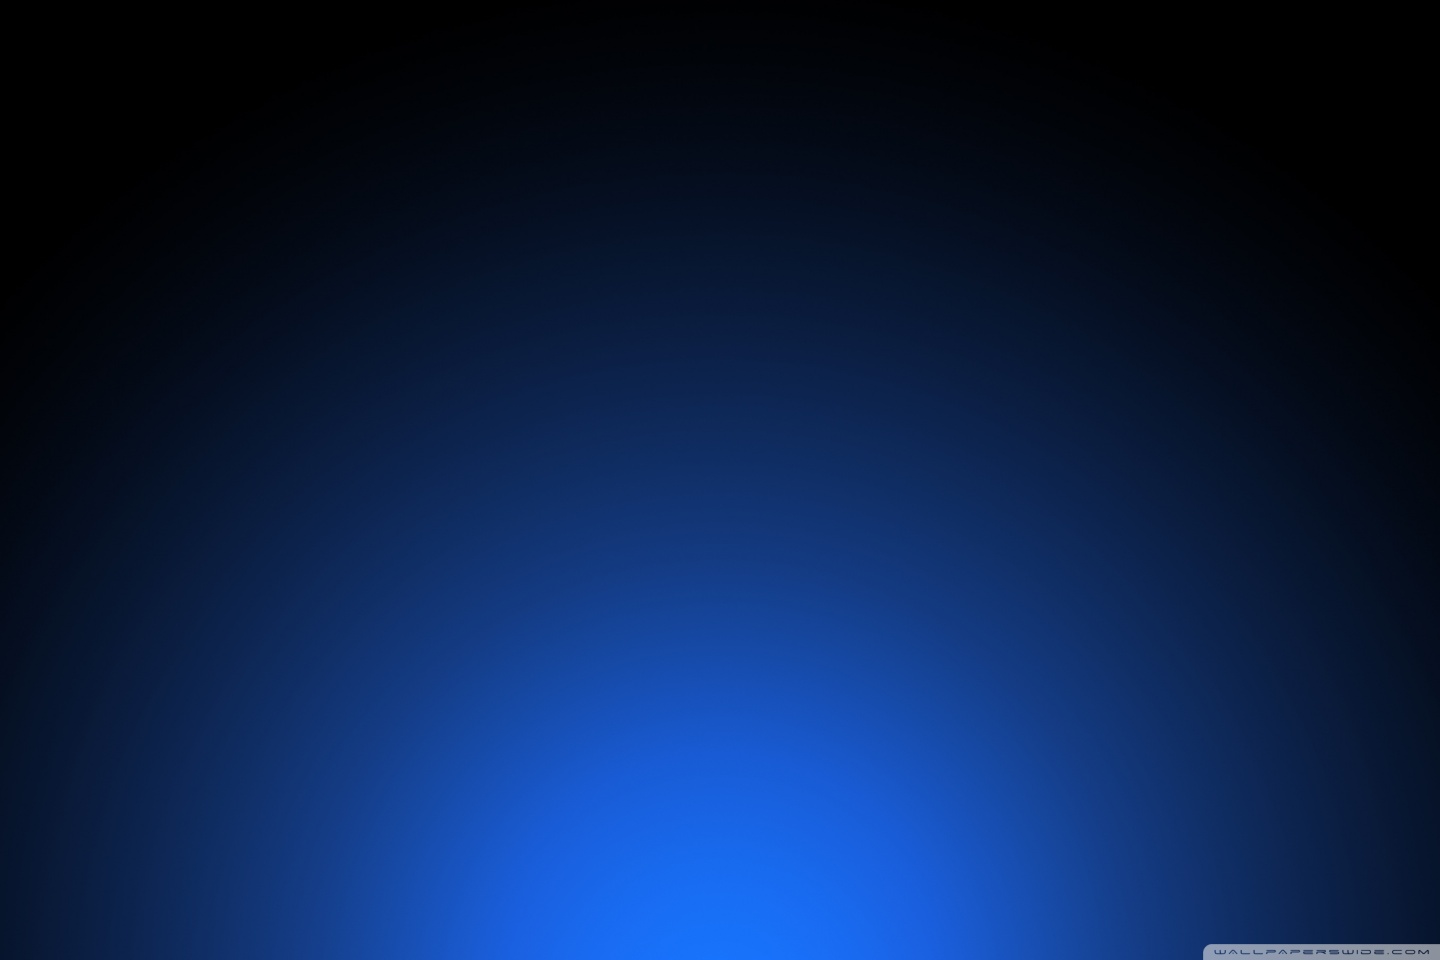 Simple Blue & Black Wallpaper Ultra HD Desktop Background Wallpaper for